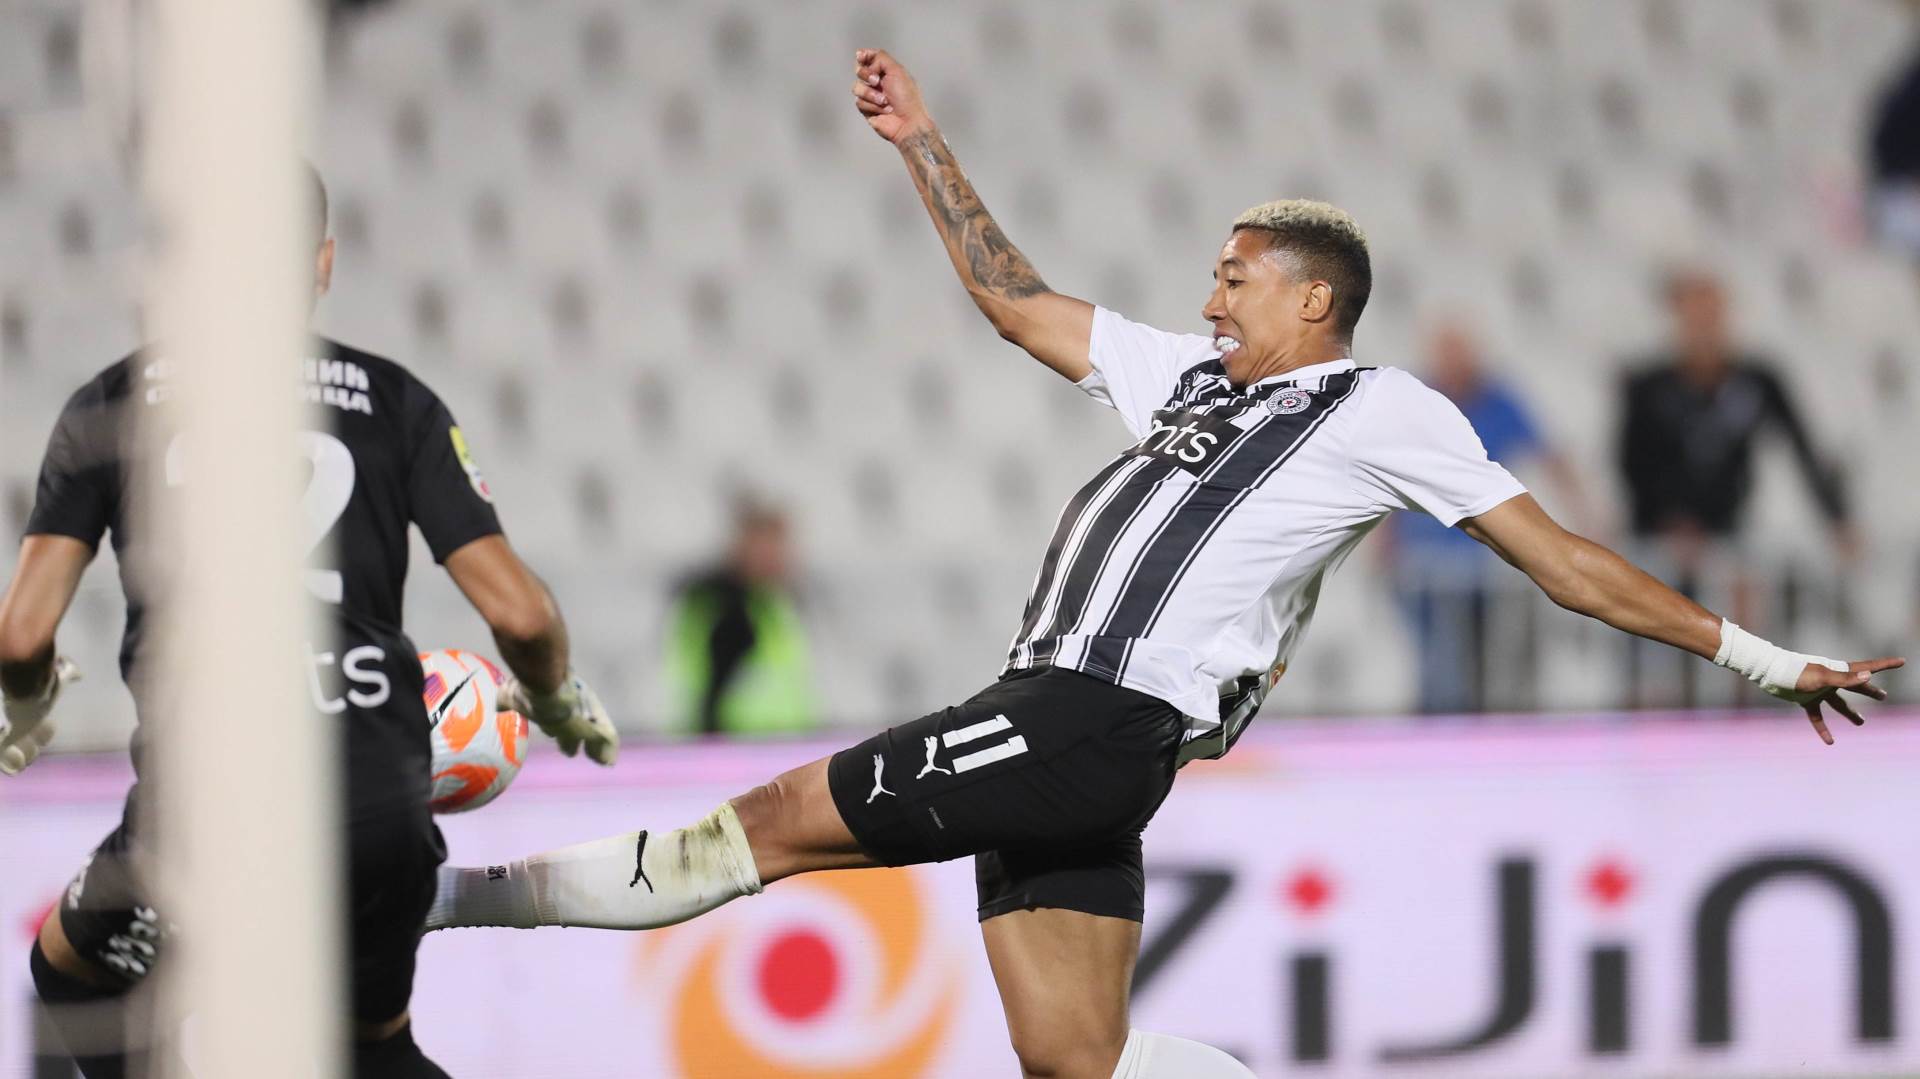 Partizan preokrenuo uz dva penala – od 0:2 do 3:2 u 98. minutu